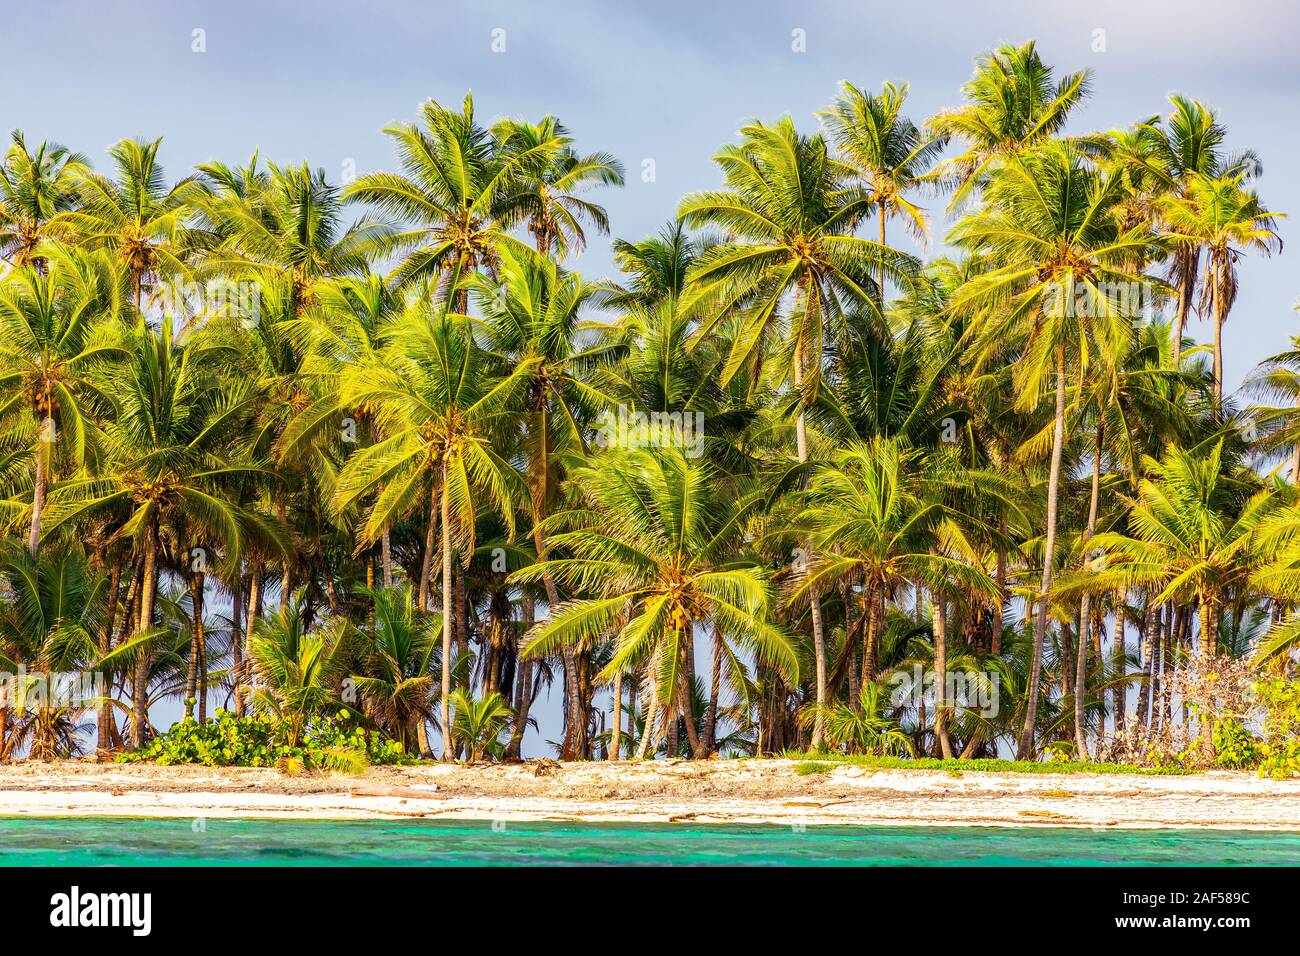 Palm trees on Caribbean Island Stock Photo